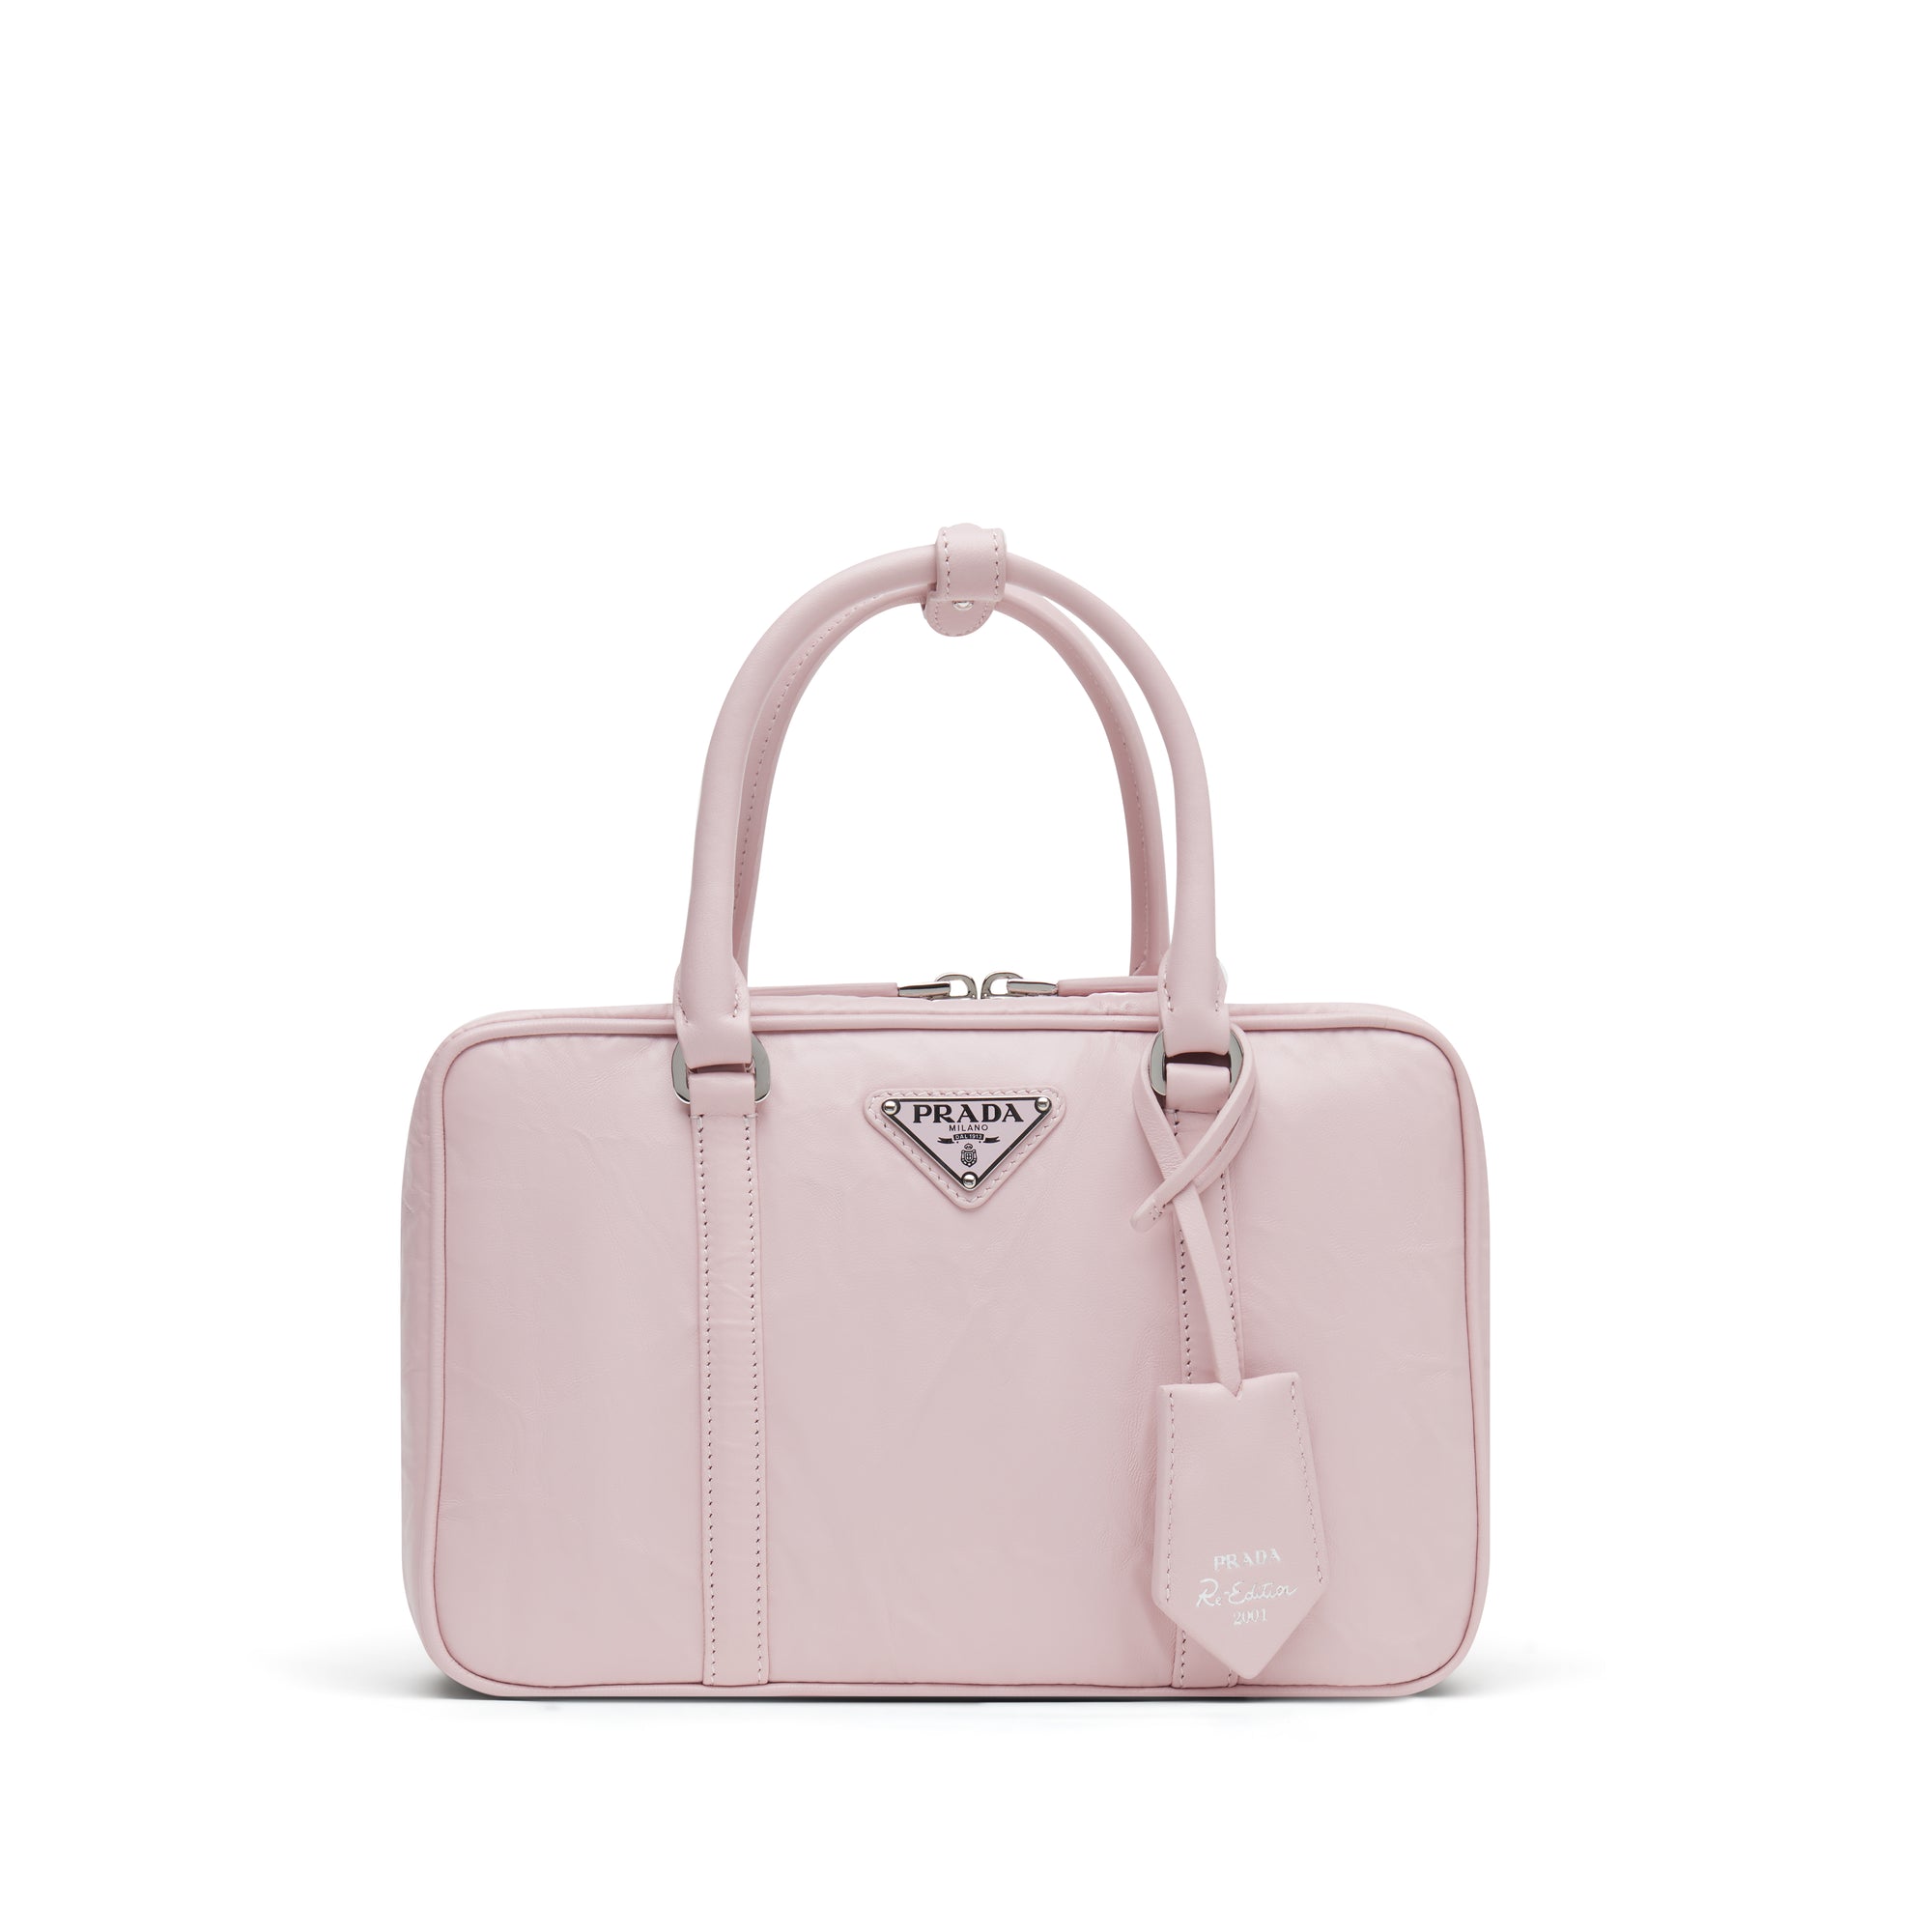 Prada - Women’s Medium Top Handle Handbag - (Alabaster Pink) view 1